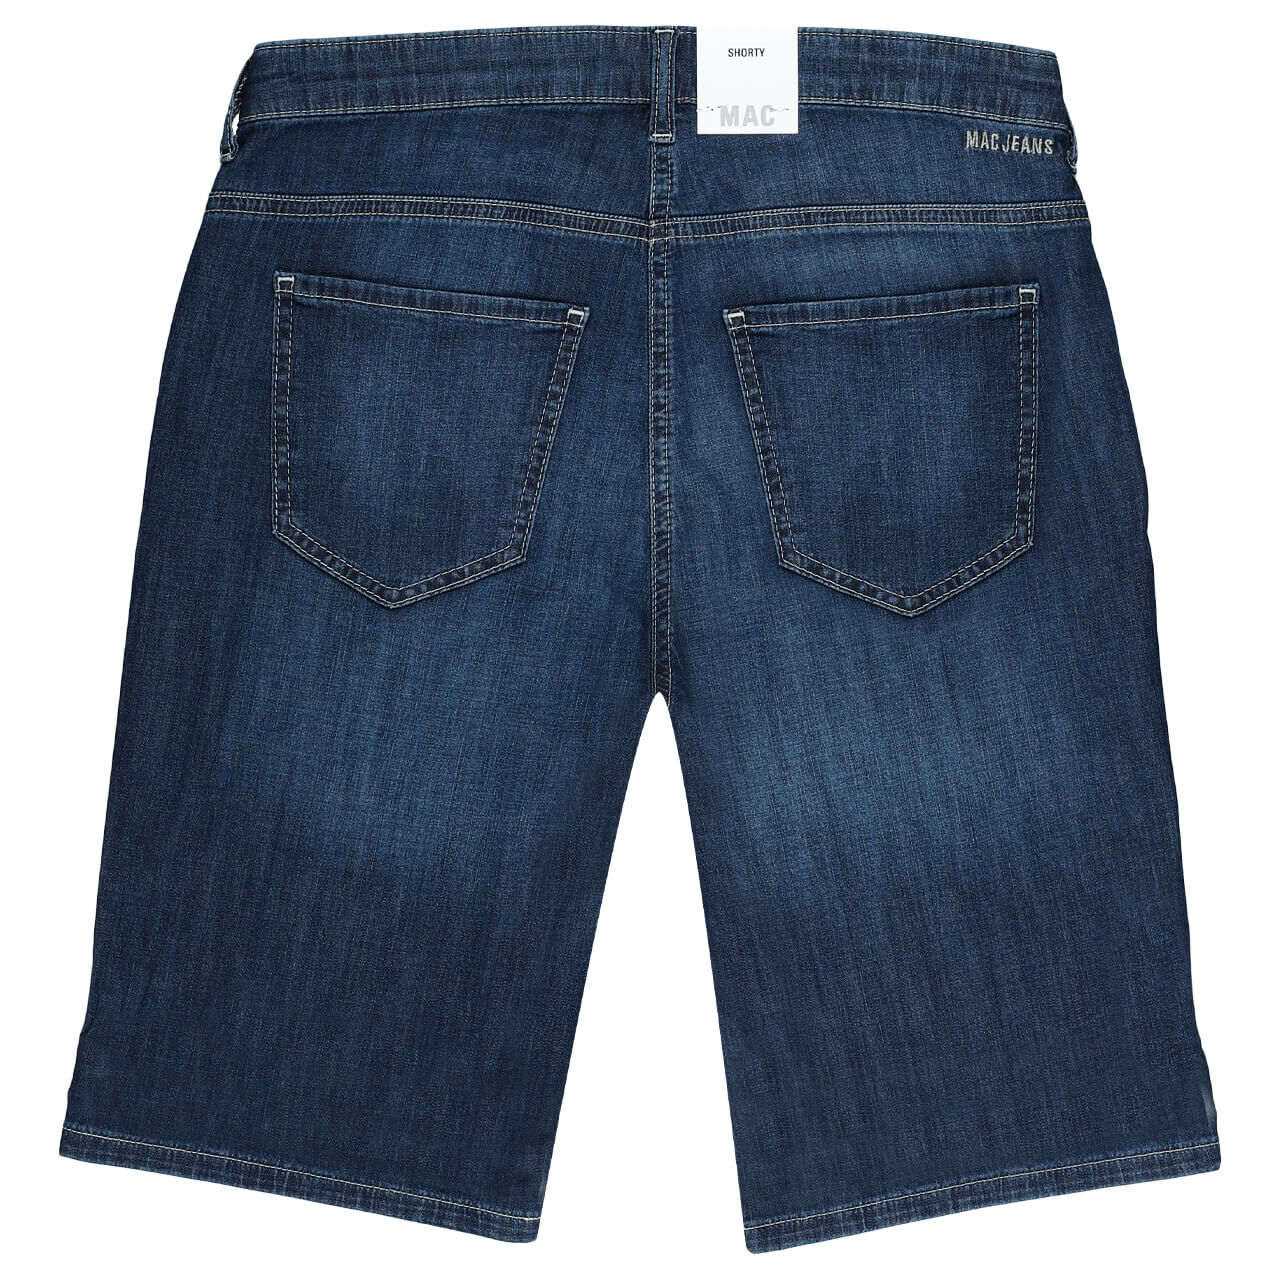 MAC Shorty Jeans dark blue basic used summer clean